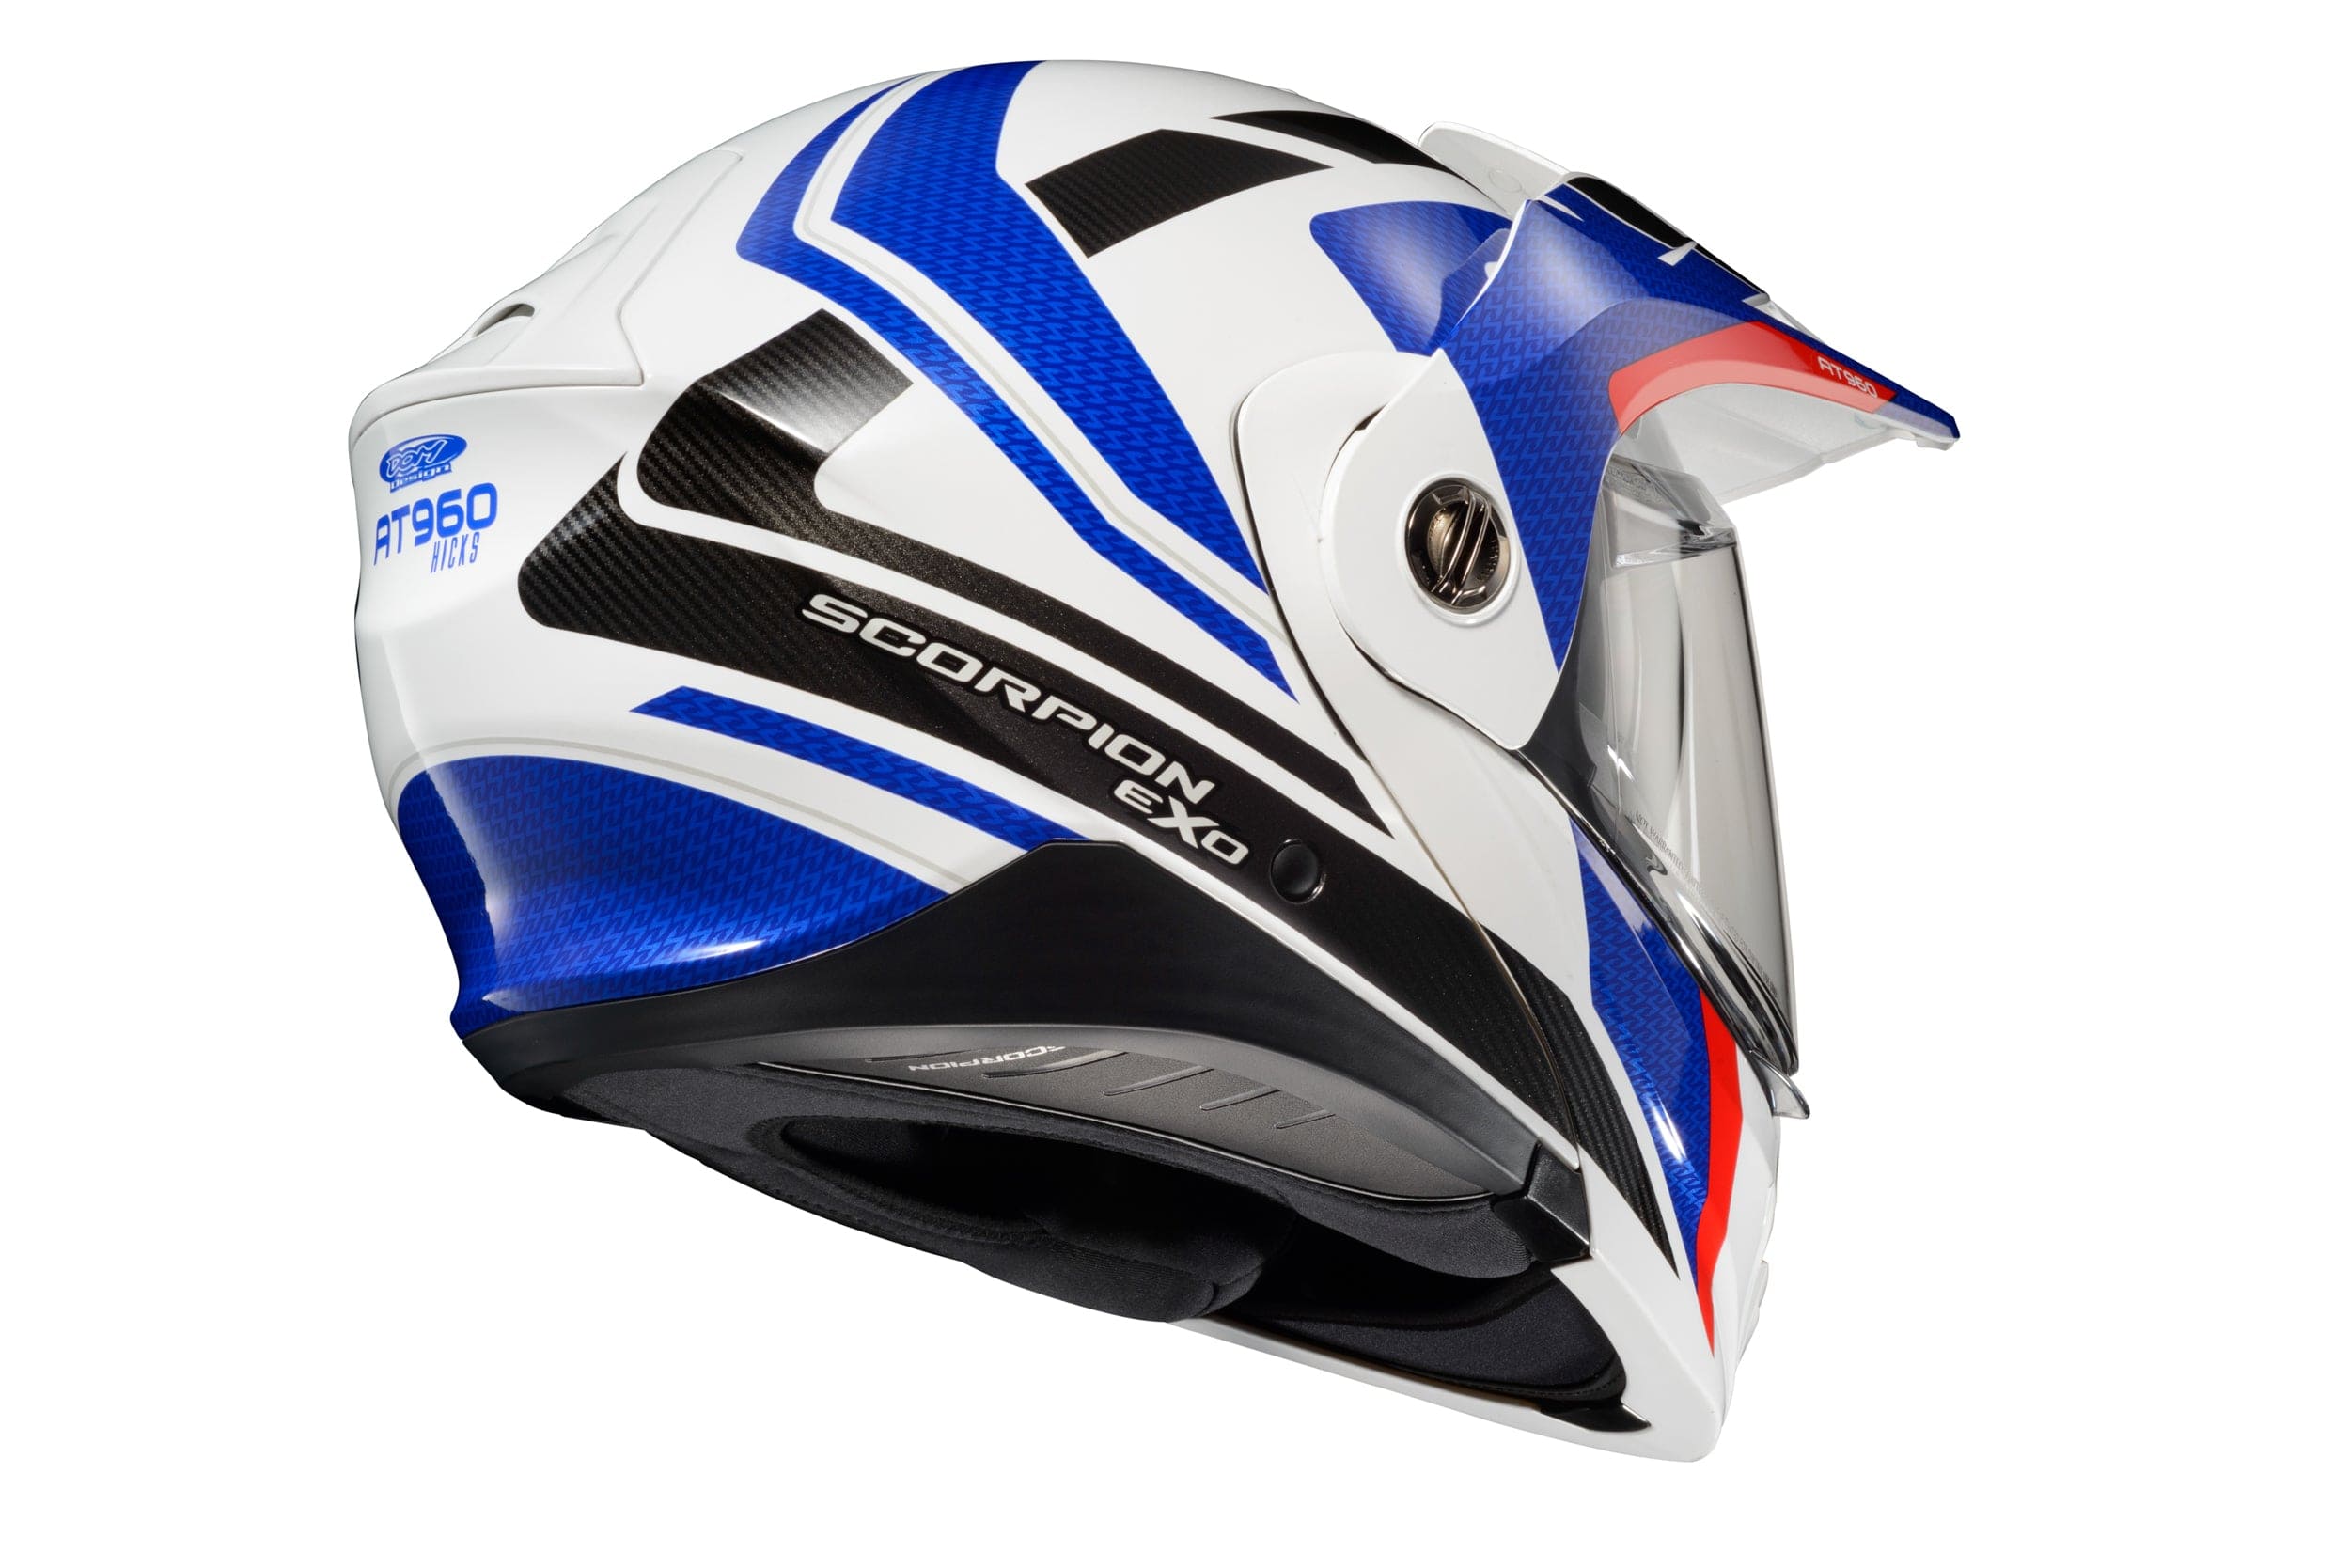 Western Powersports Modular Helmet EXO-AT960 Modular Helmet Hicks by Scorpion Exo